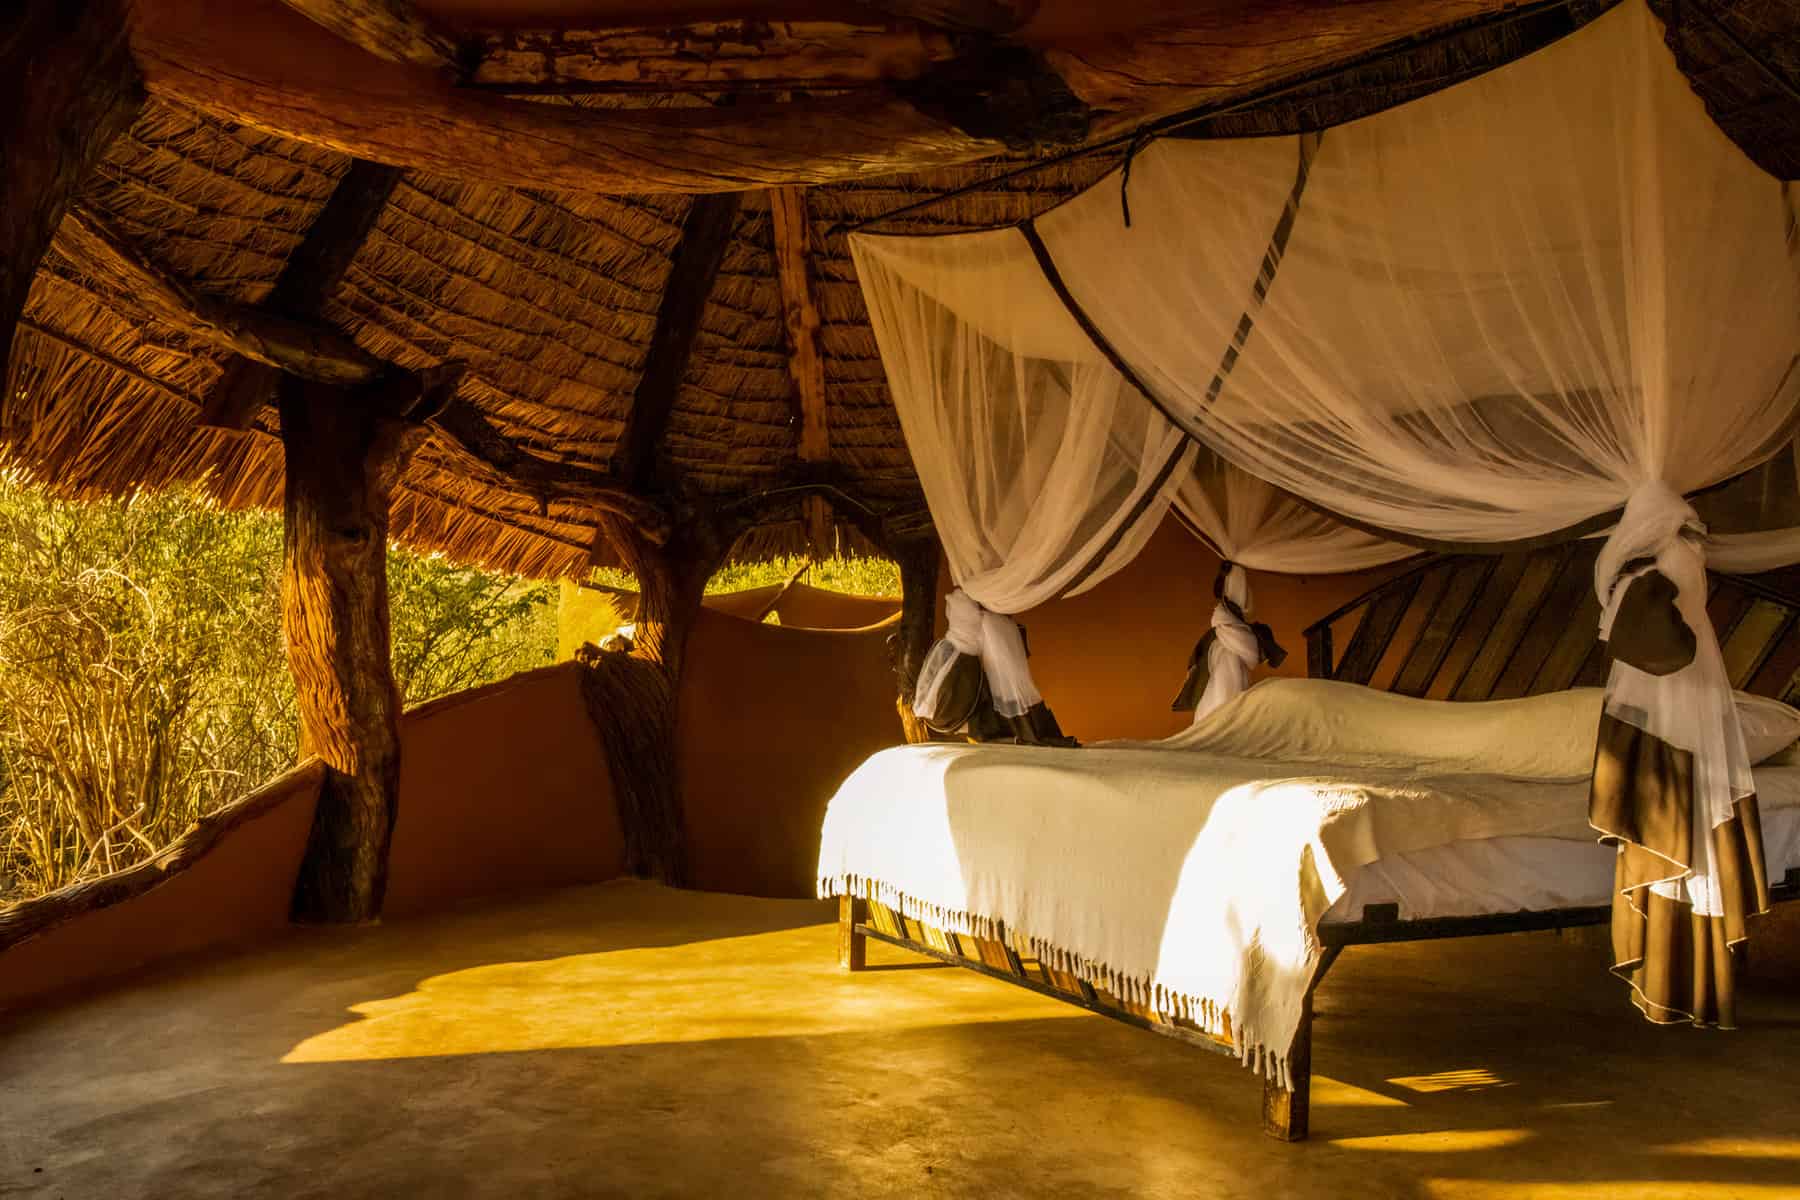 A bedroom at a lodge in Kenya